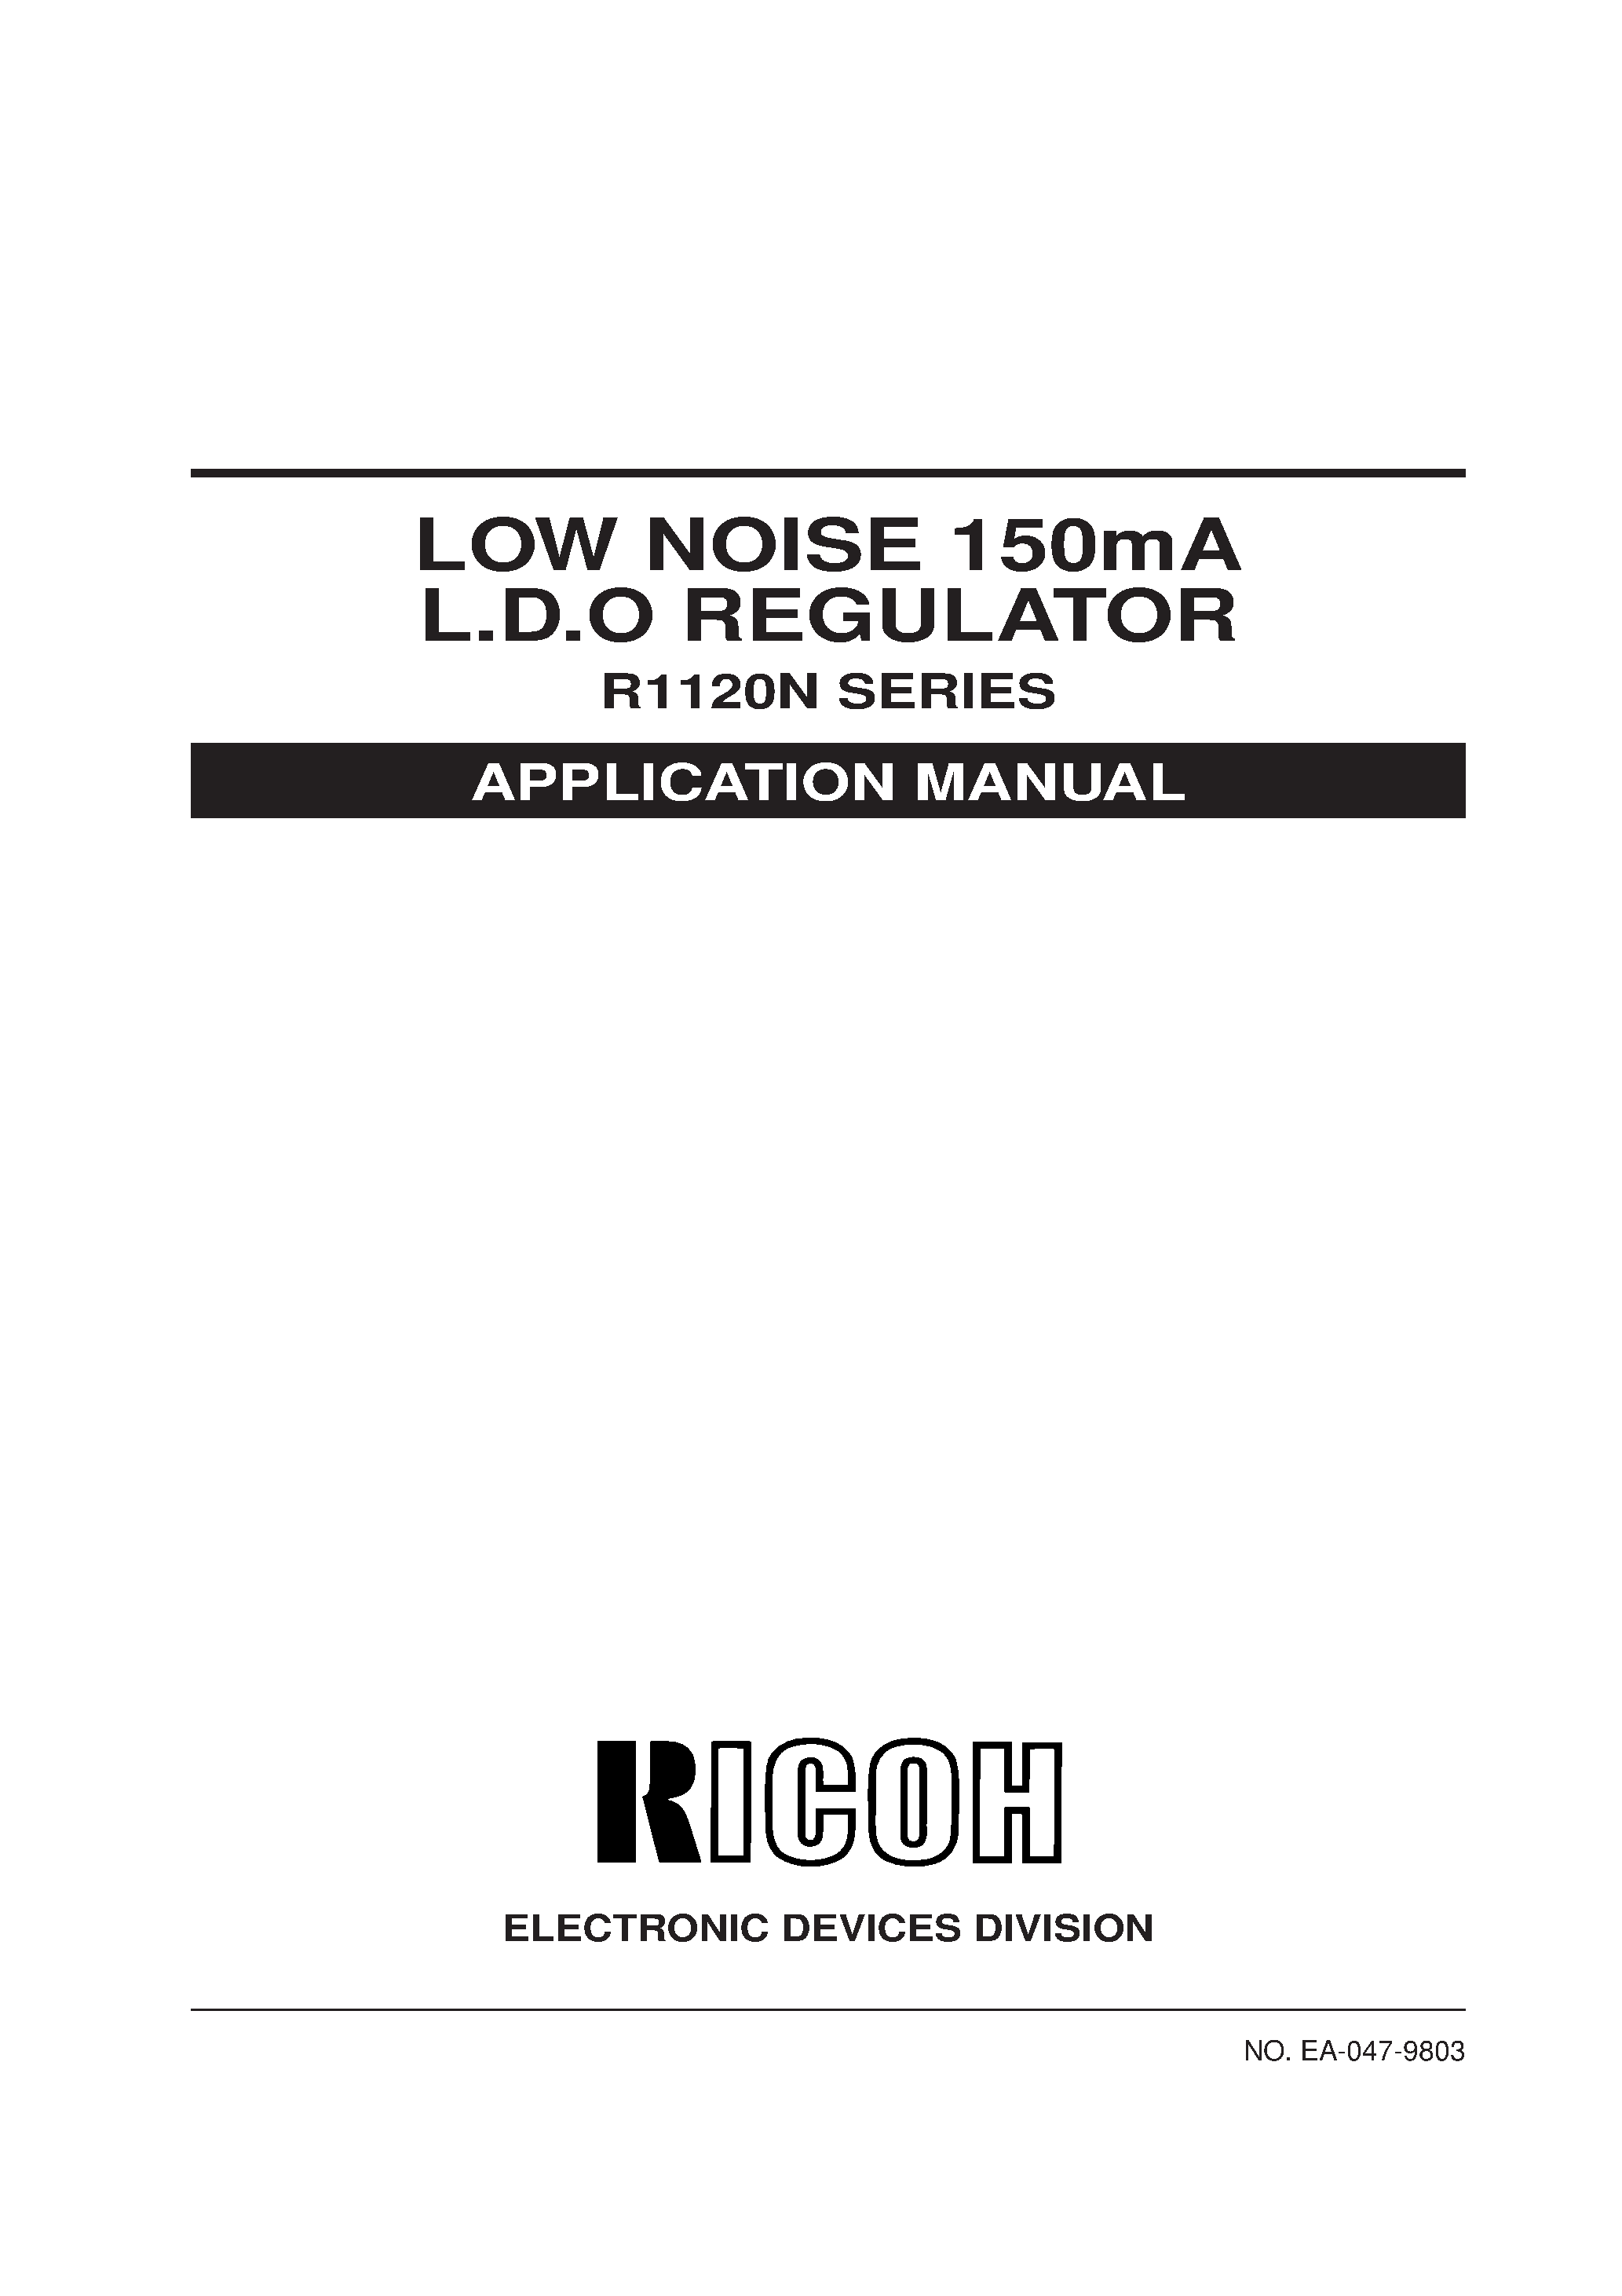 Datasheet R1120N401B - LOW NOISE 150mA L.D.O REGULATOR page 1